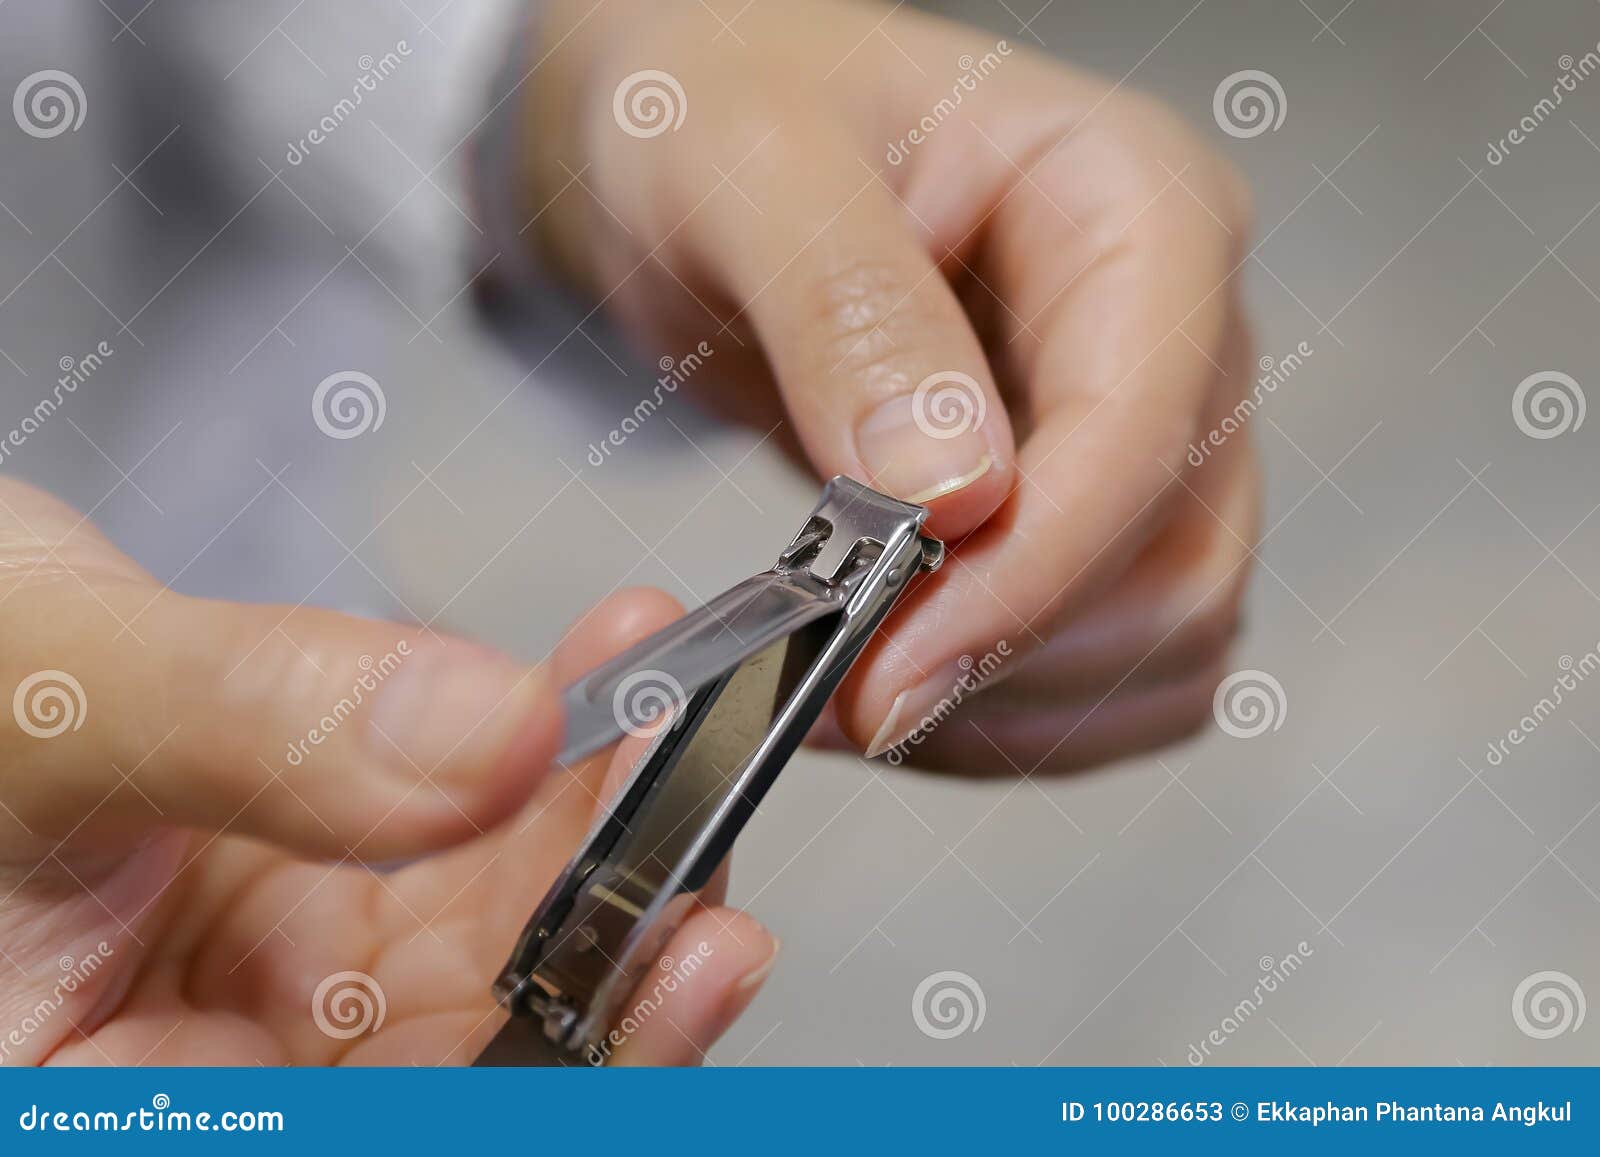 woman clipping fingernail